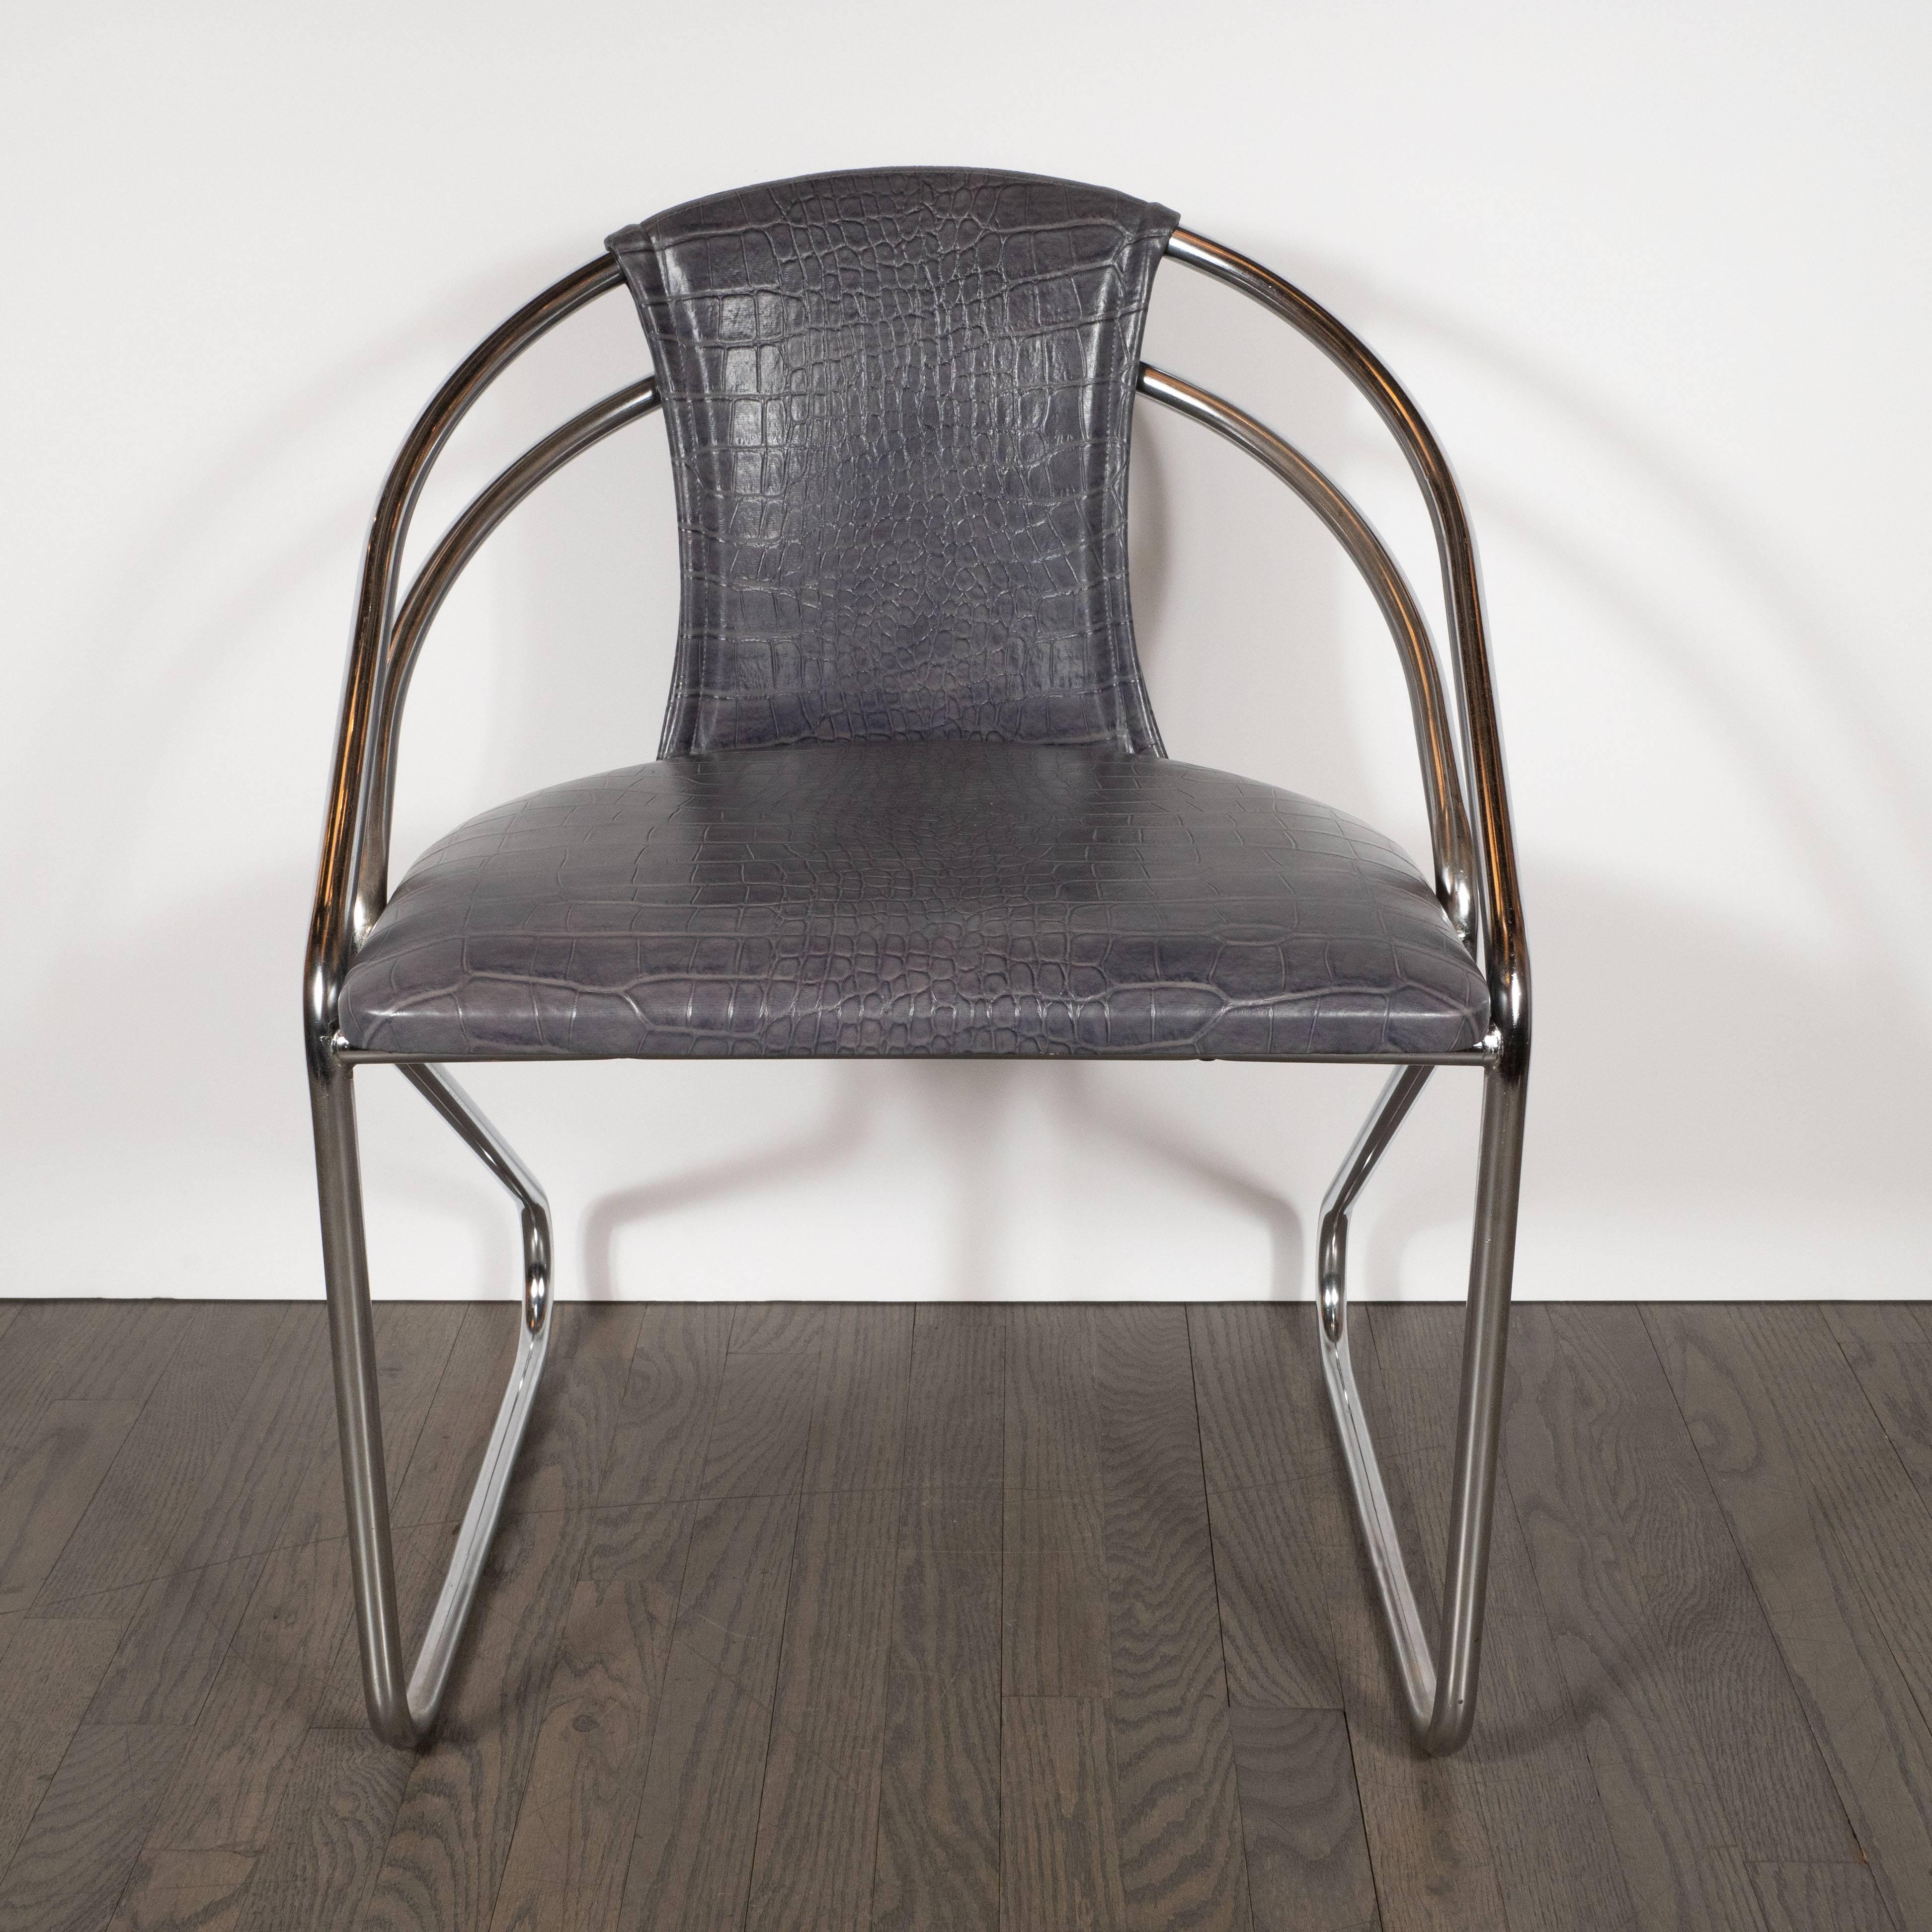 American Art Deco Machine Age Chrome and Gauffraged Crocodile Leather Chair